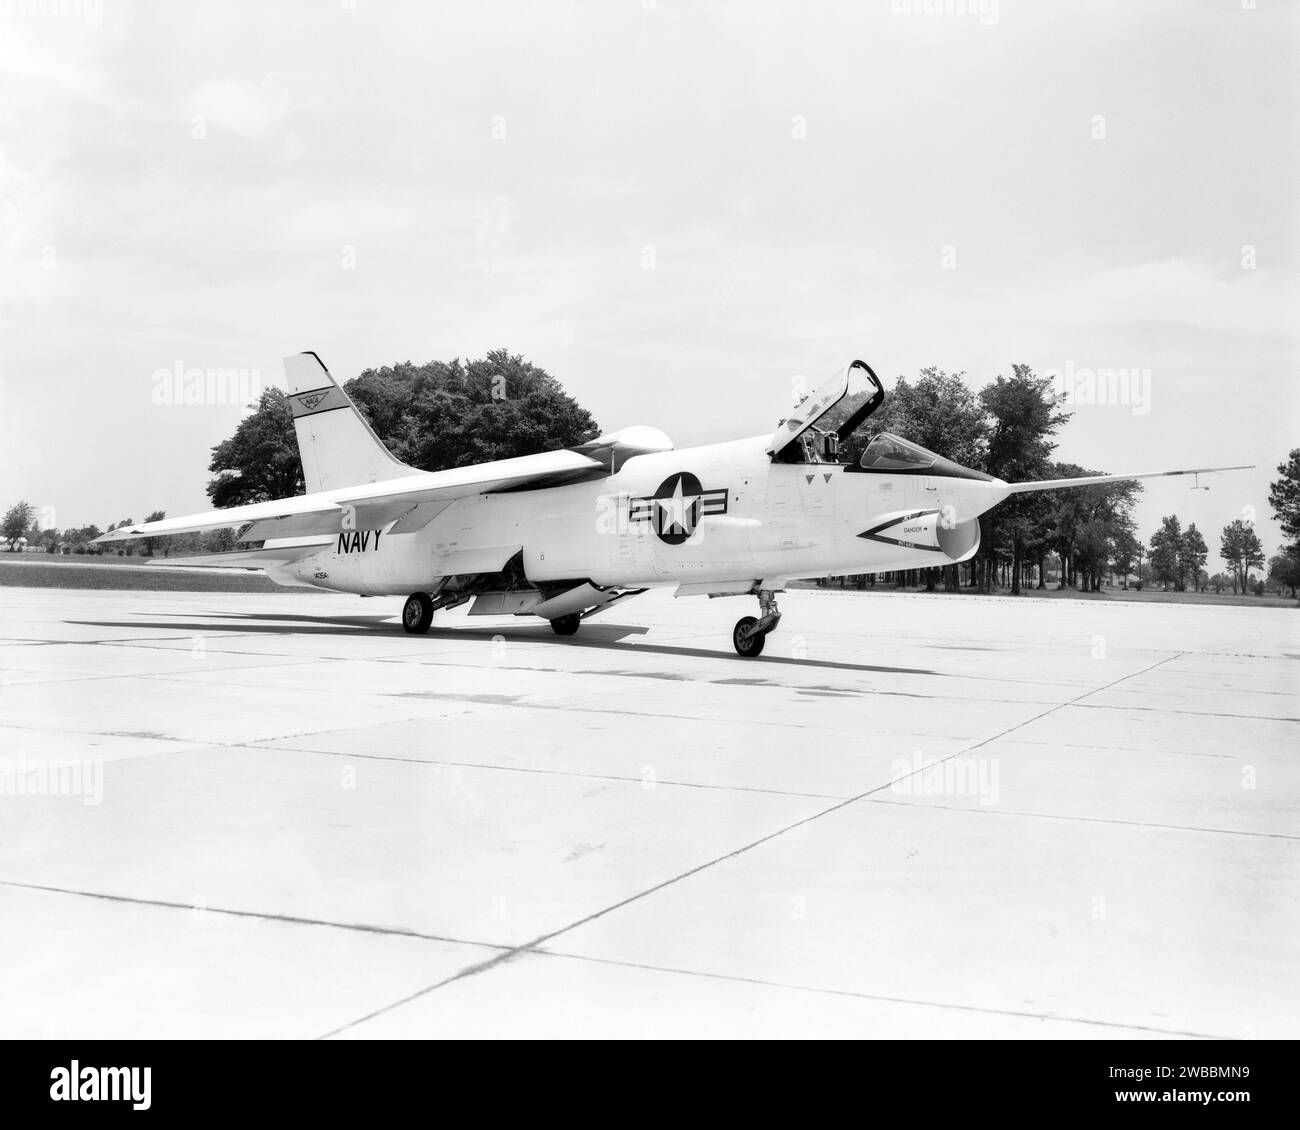 F-8U Crusader military aircraft, NASA Langley Research Center, Hampton, Virginia, USA, National Advisory Committee for Aeronautics , 1957 Stock Photo